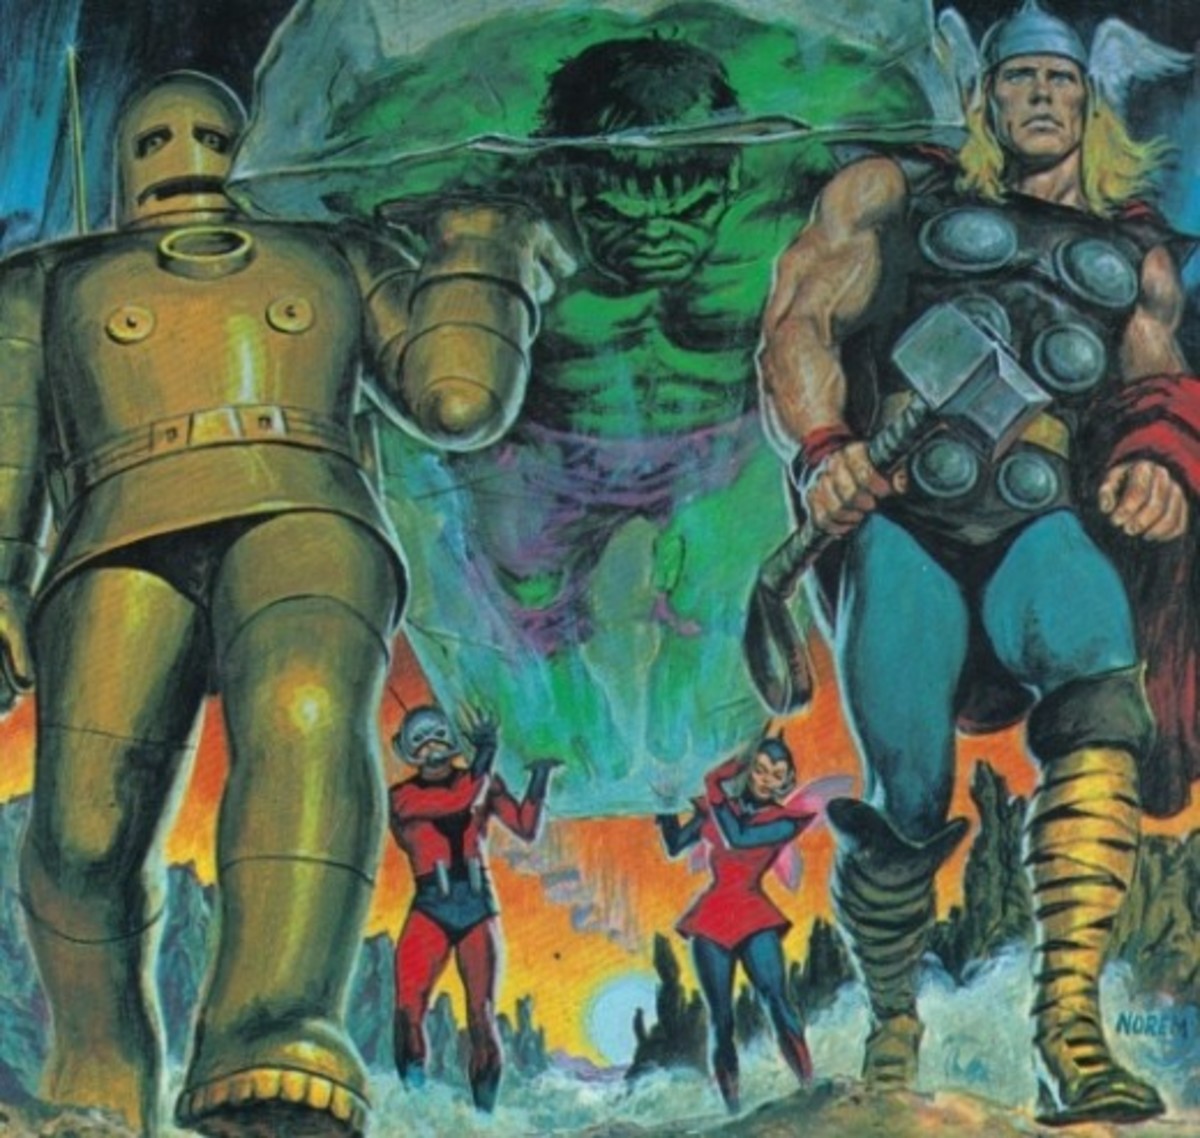 the-rampaging-hulk-marvel-comic-book-review